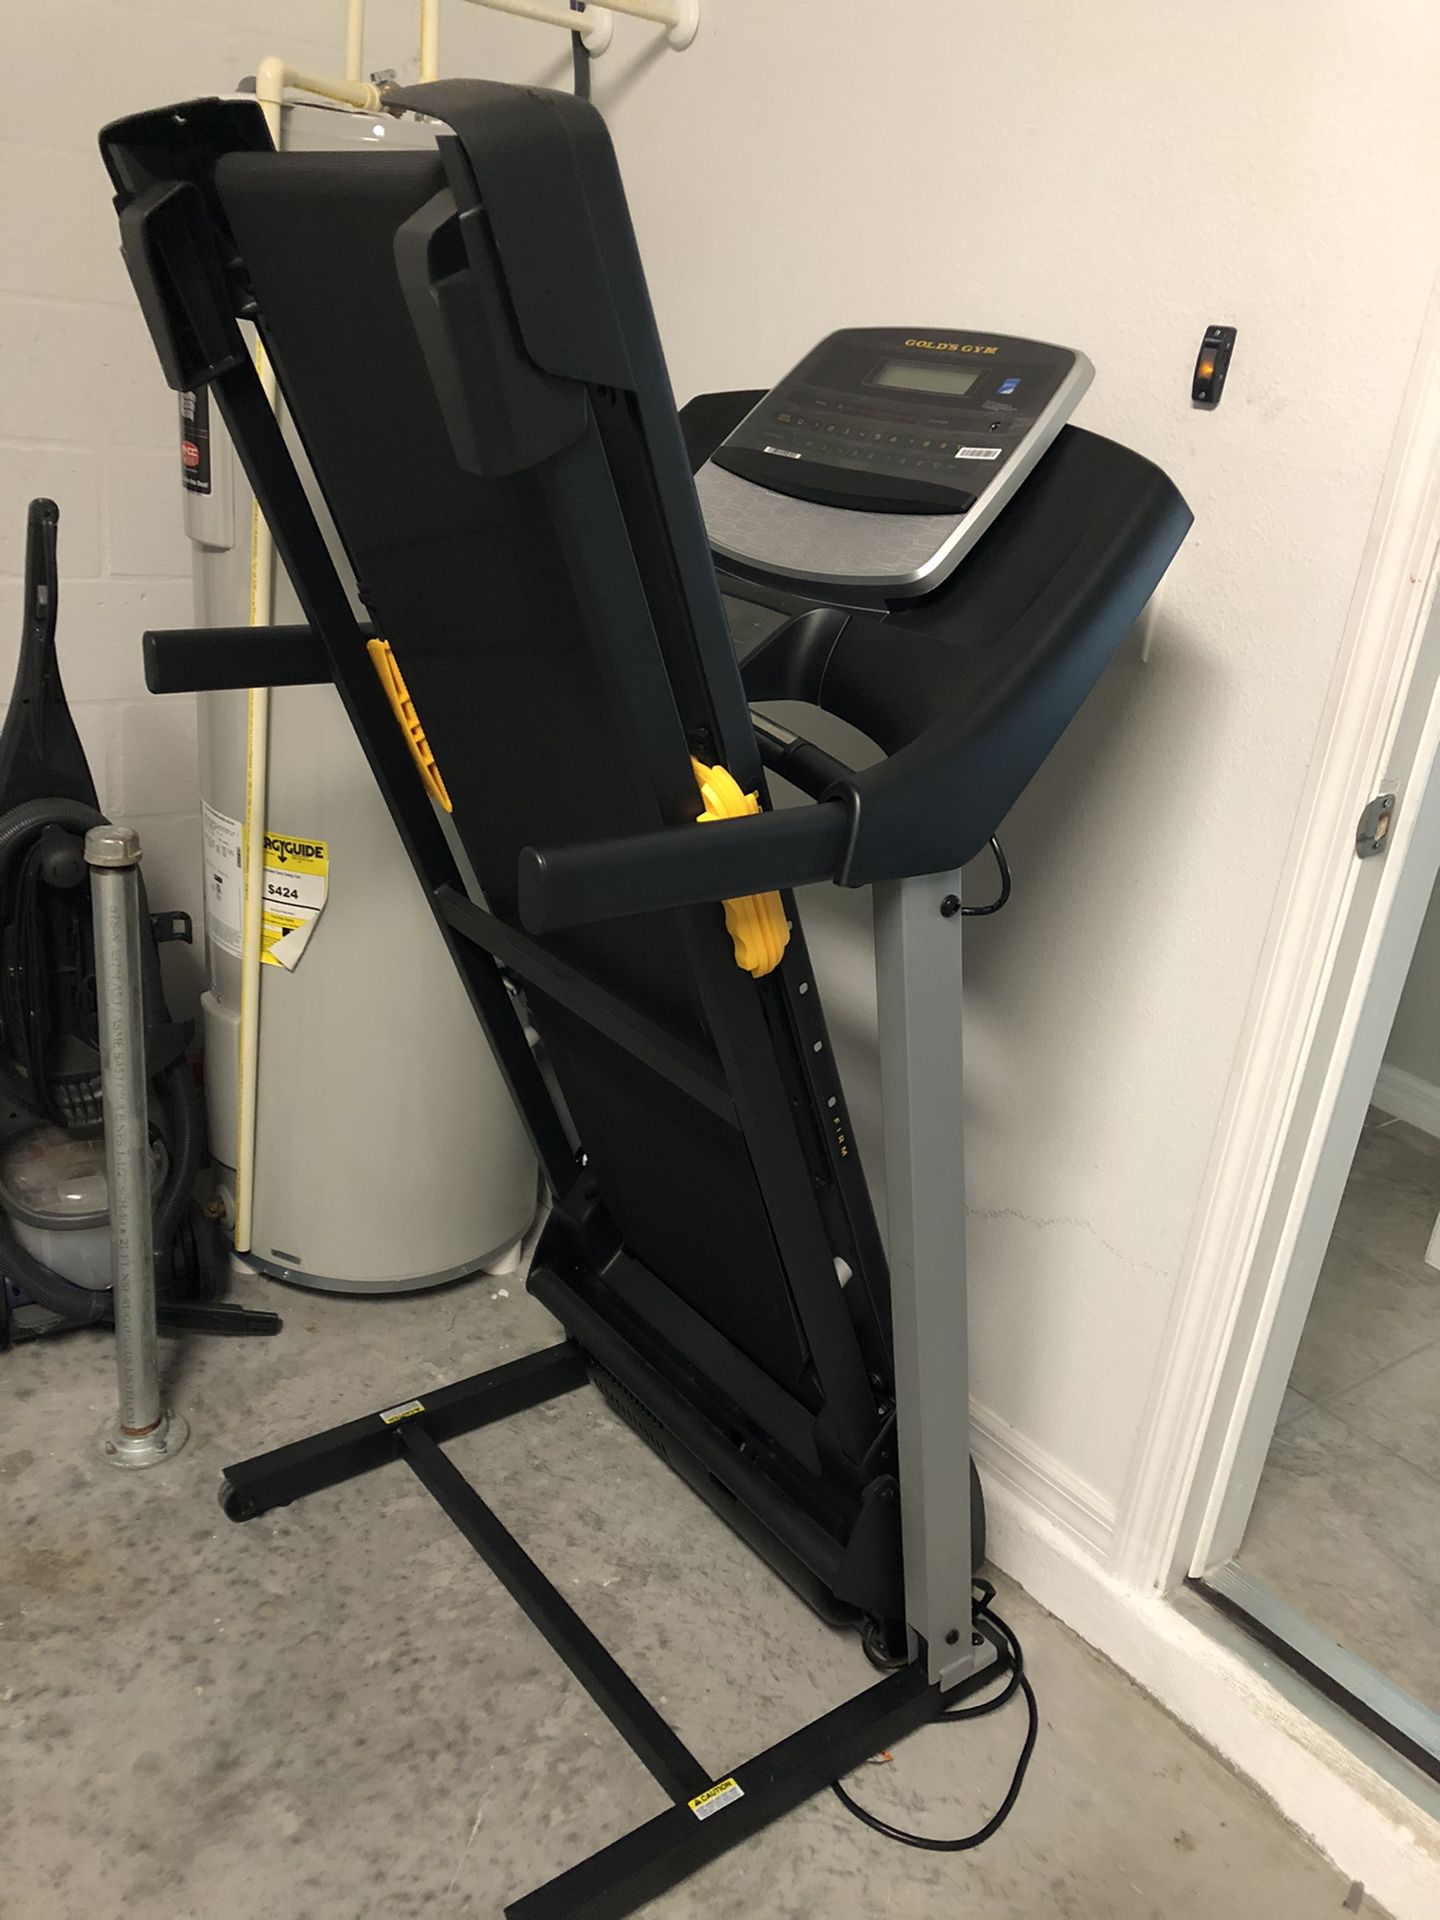 Golds gym 430i treadmill